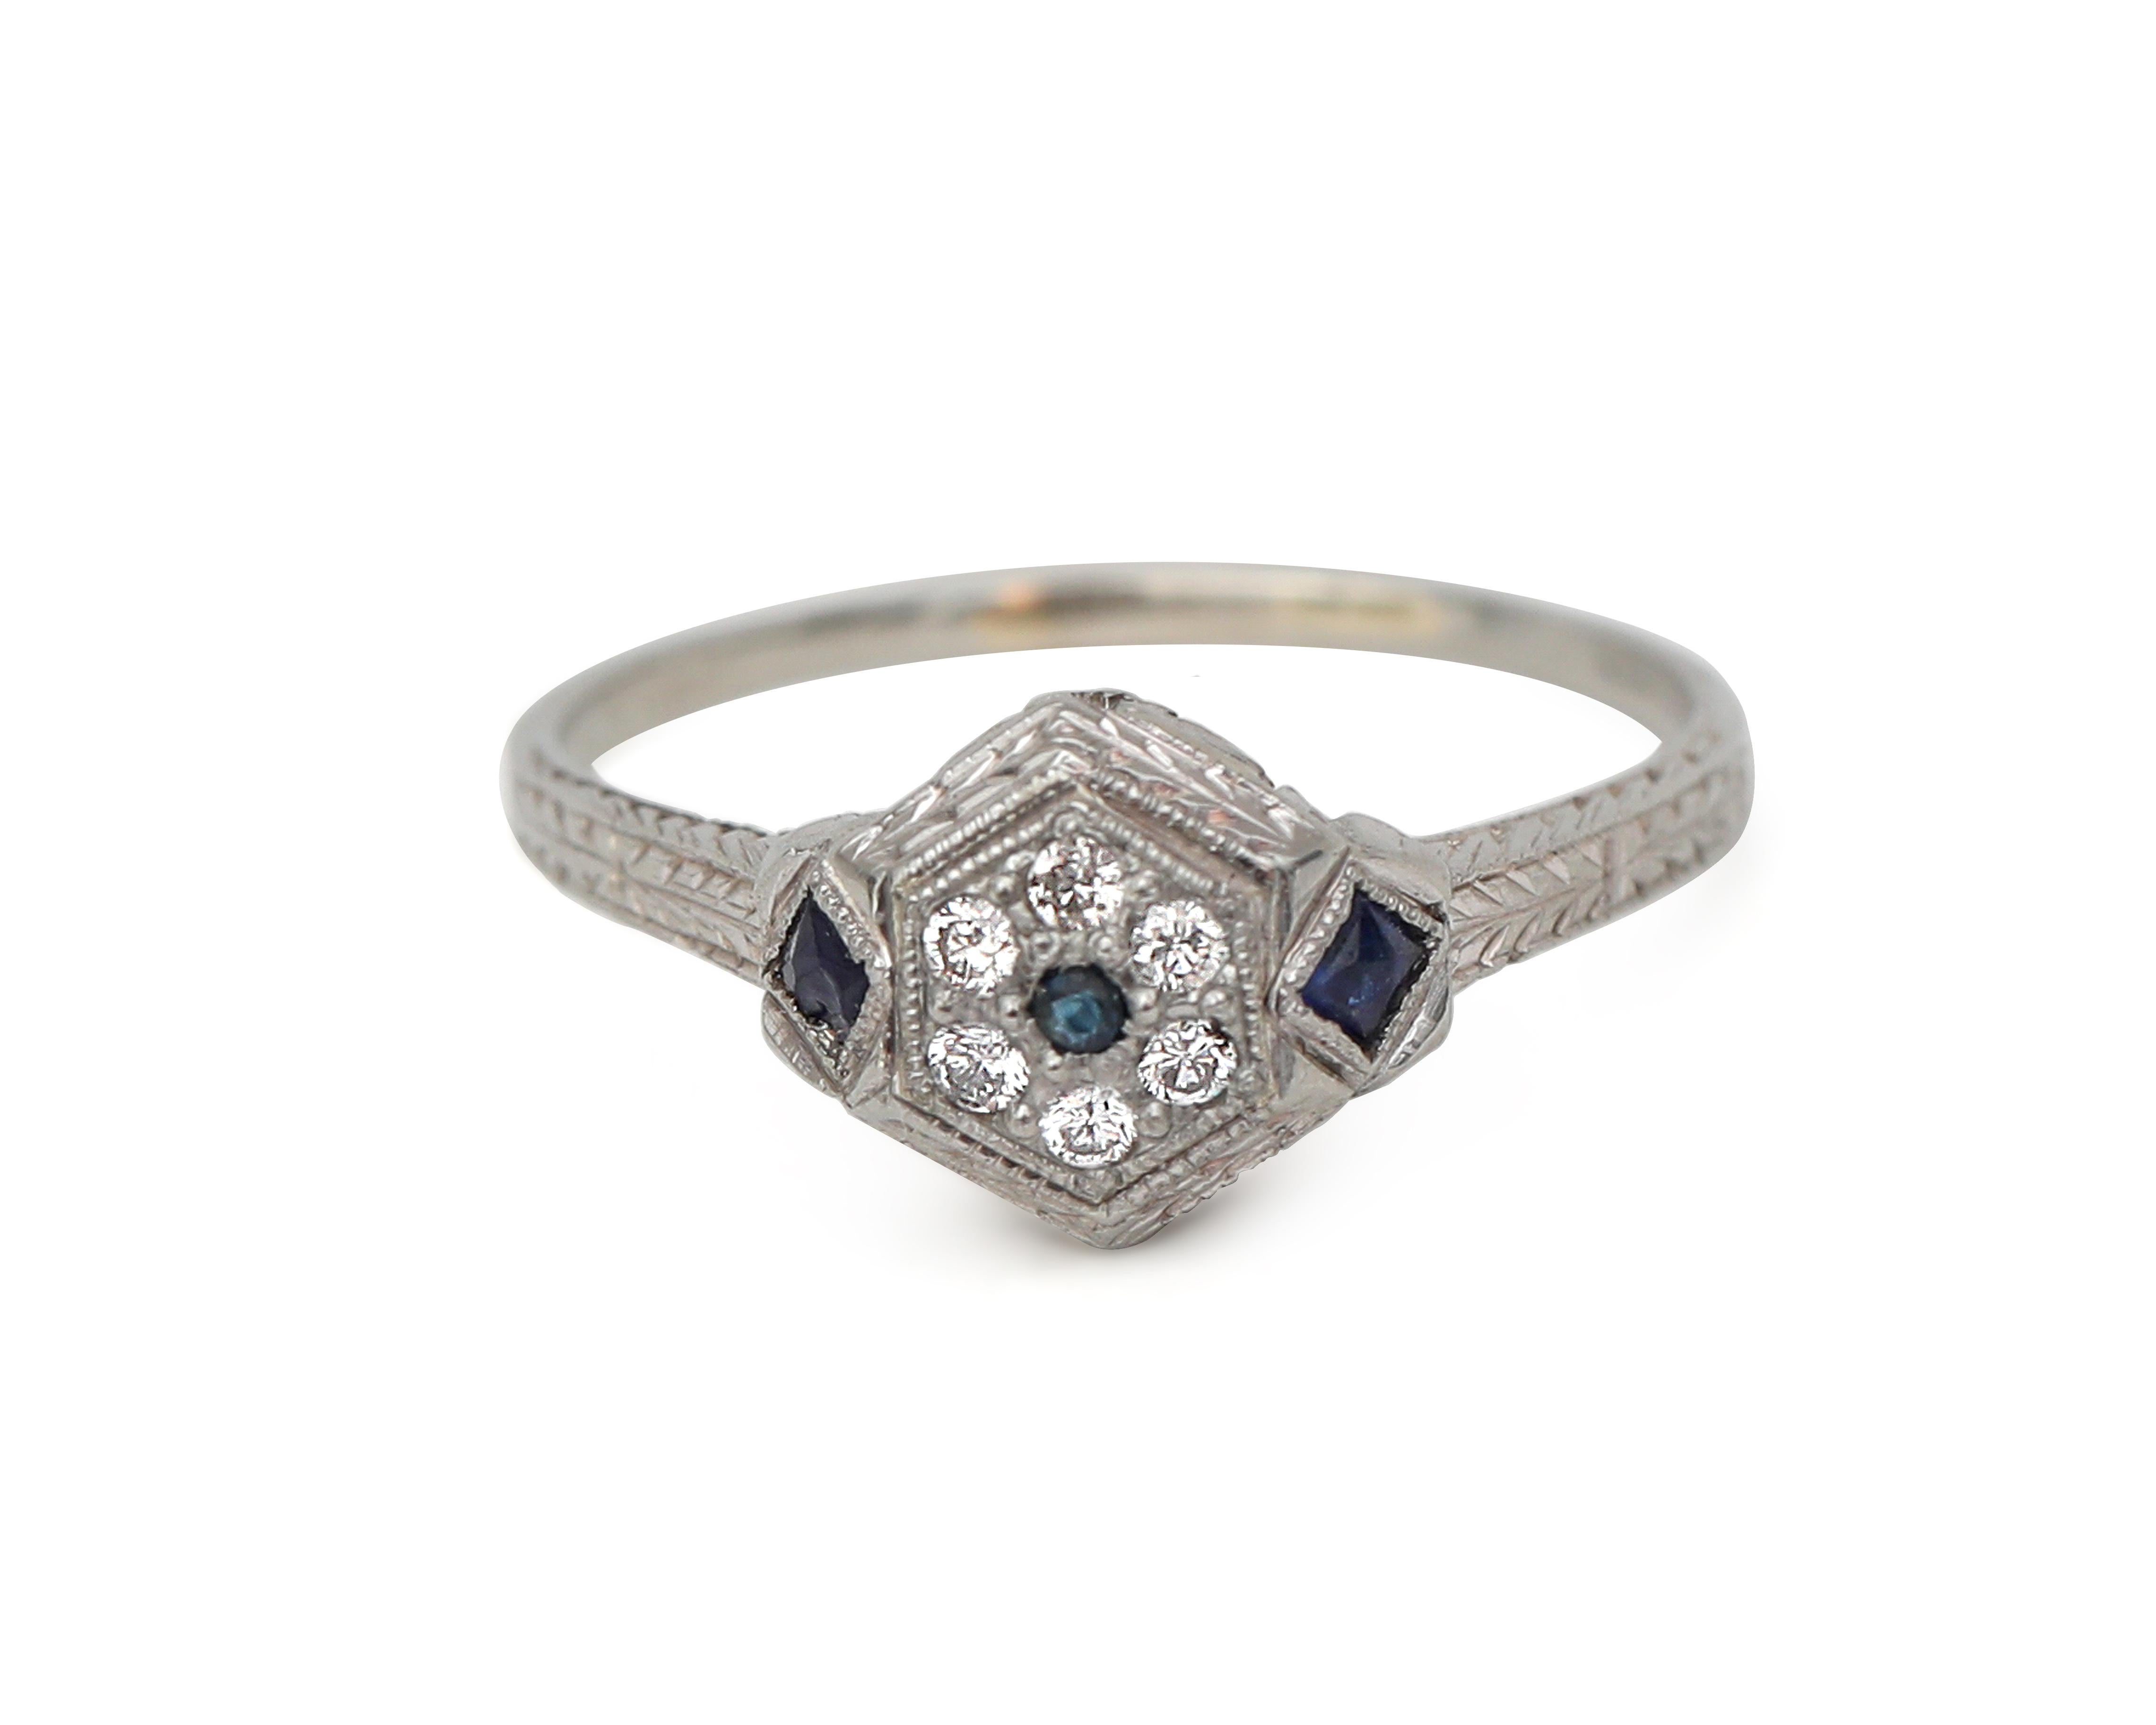 Women's Art Deco Vintage Diamond and Sapphire Halo Etched 18 Karat White Gold Ring